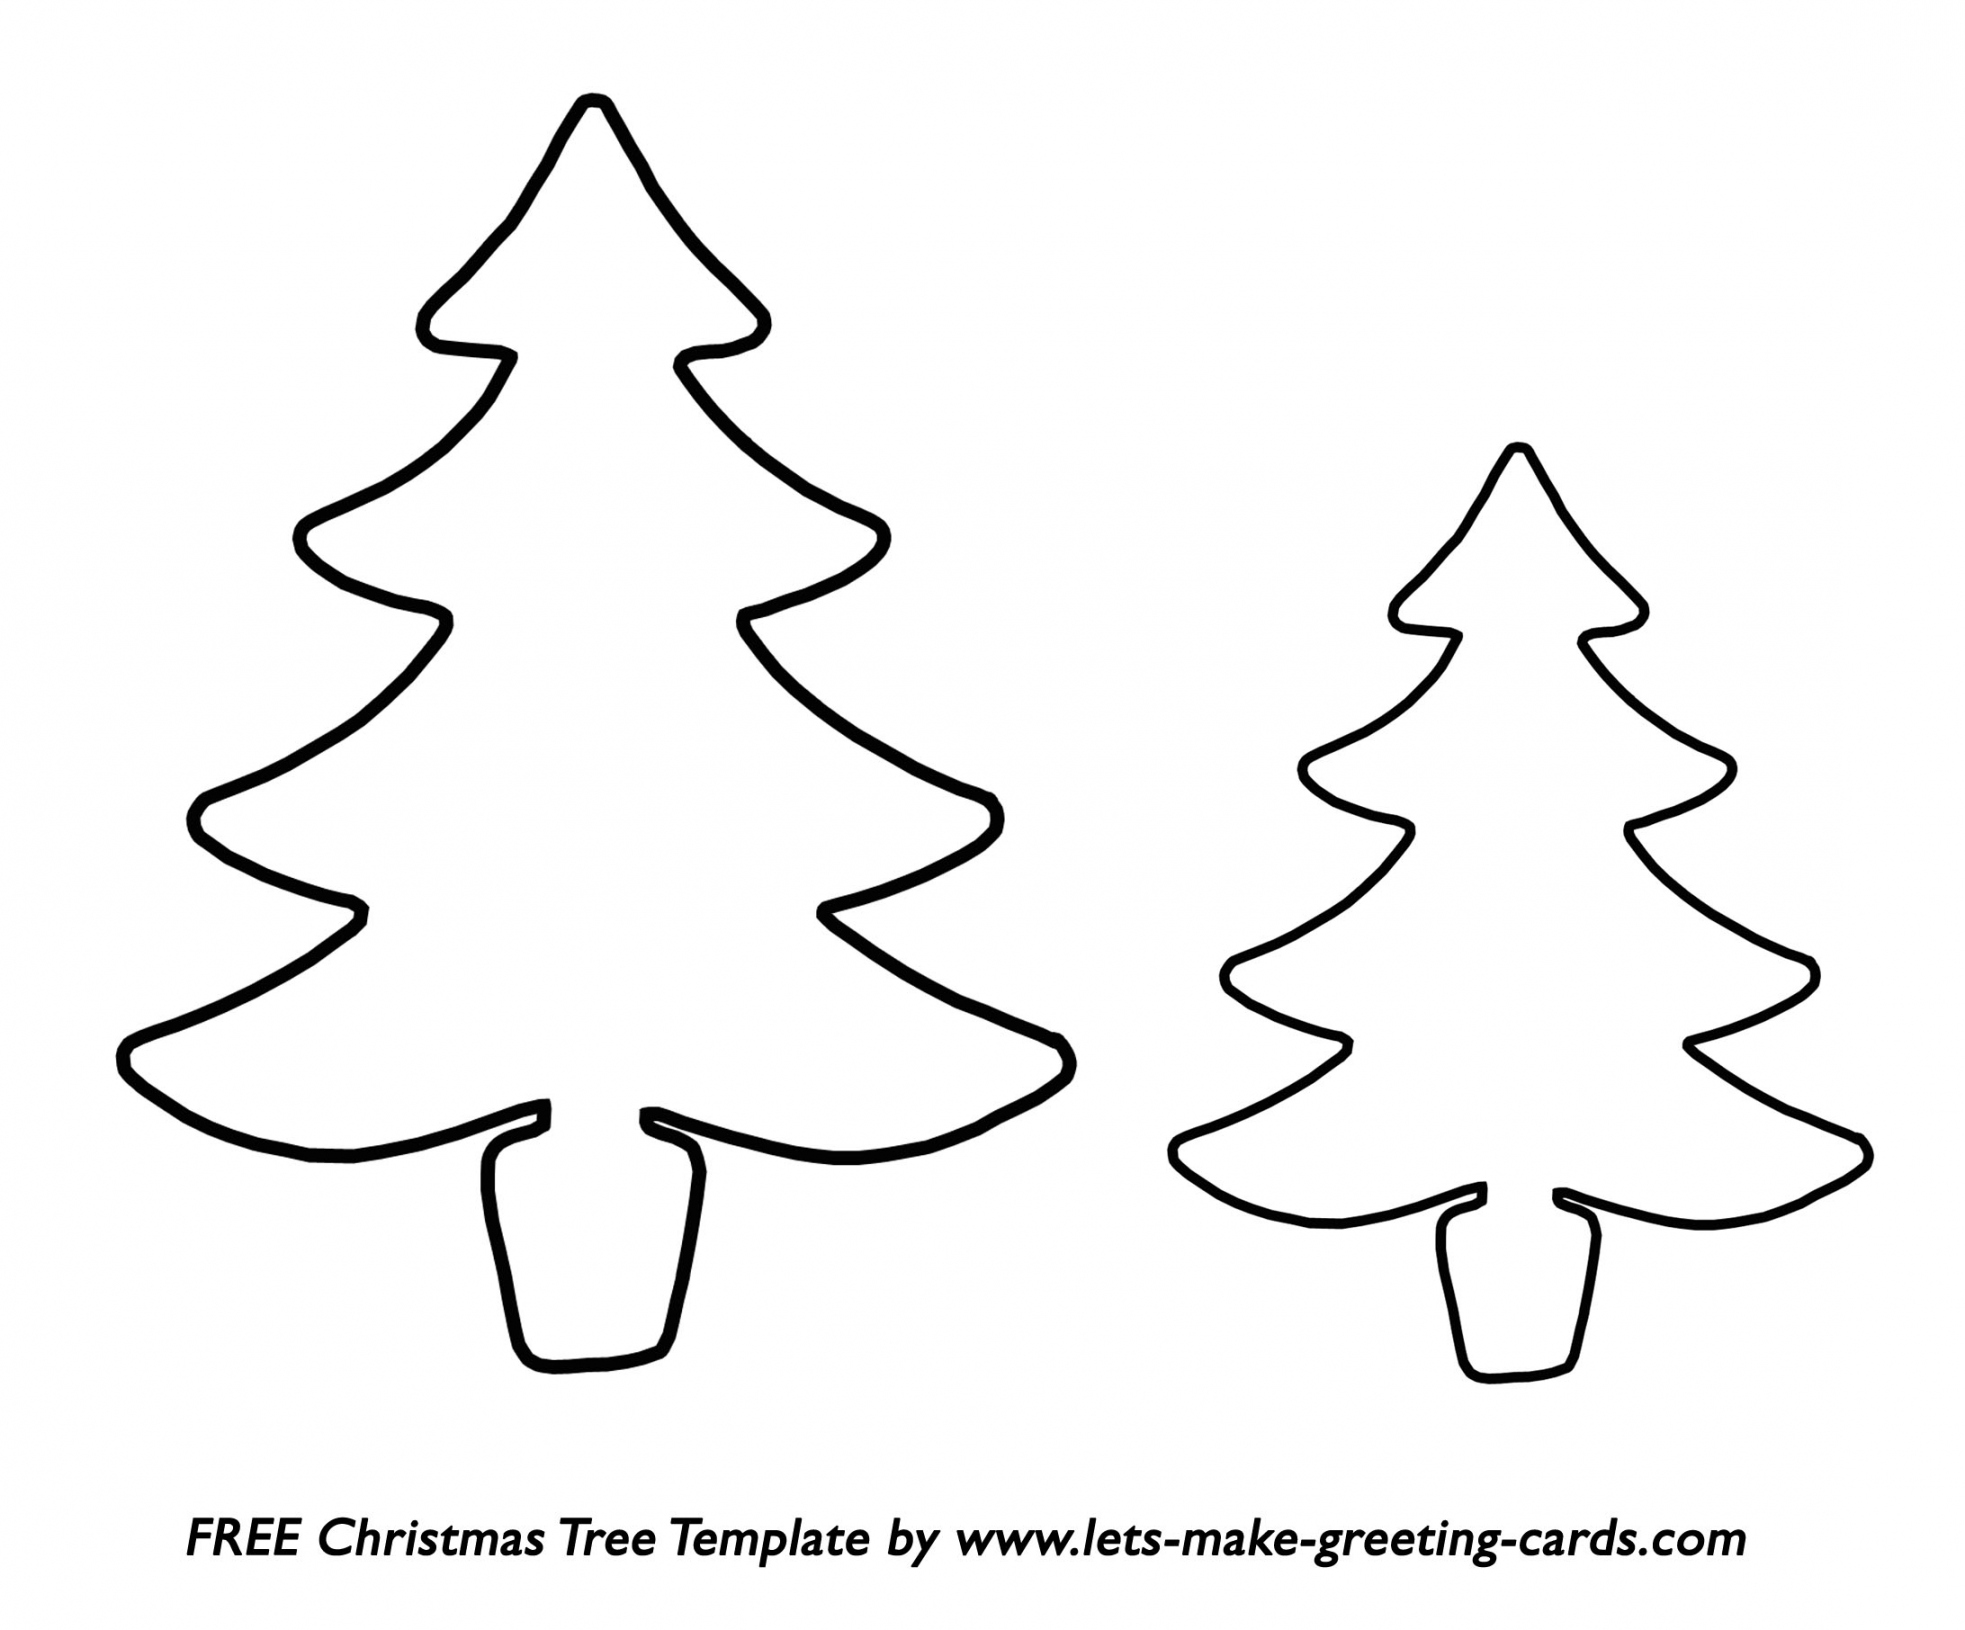 Free Christmas Tree Templates - FREE Printables - Printable Christmas Tree Pattern